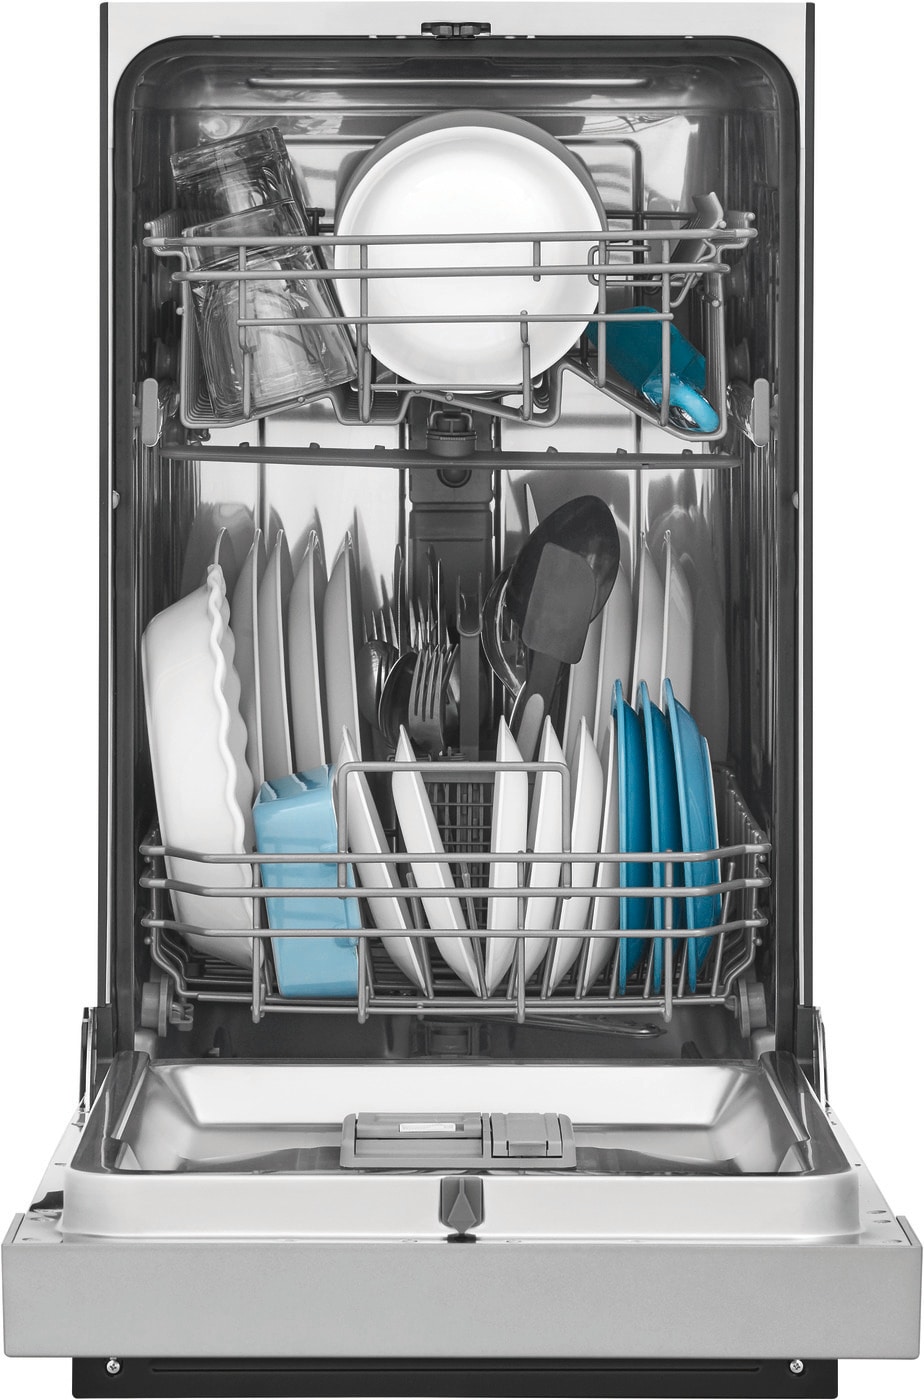 Frigidaire&nbsp;18" Stainless Steel Tub Dishwasher - image 4 of 9